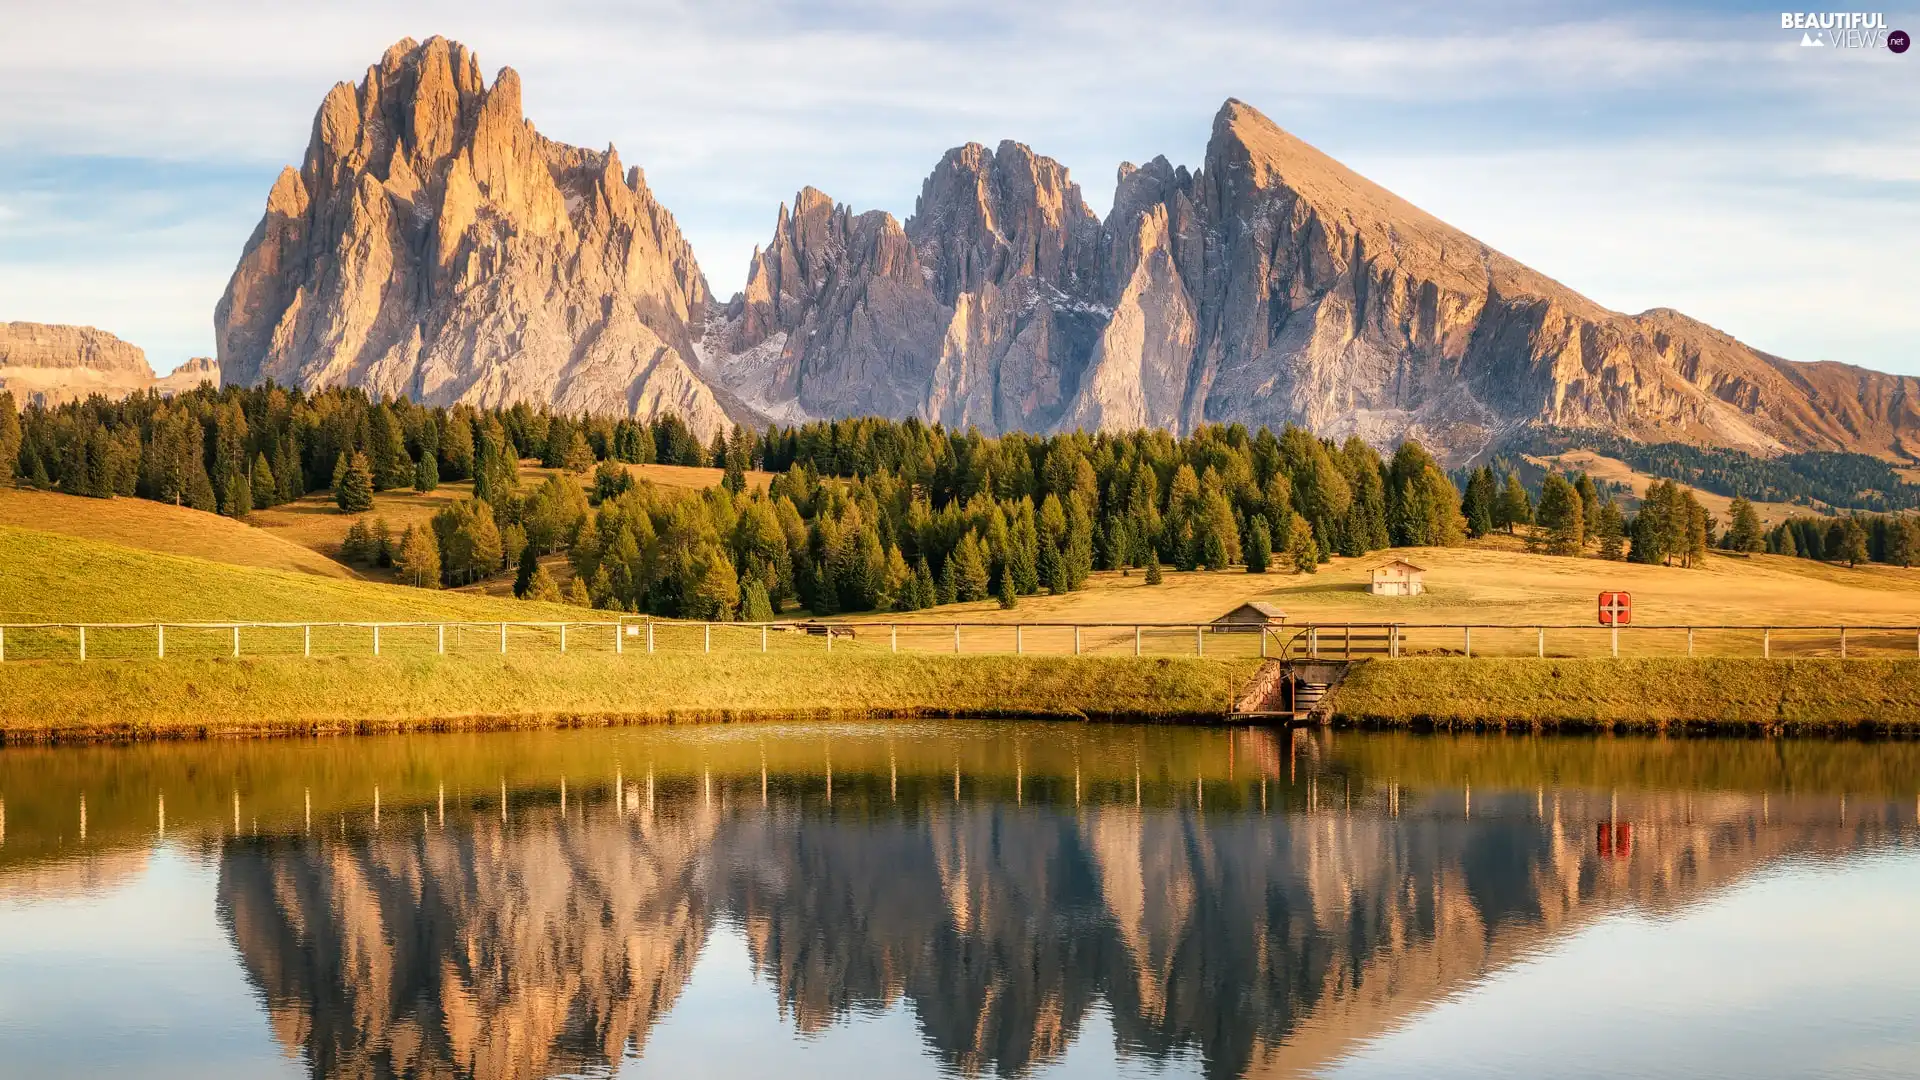 Dolomites, Mountains, Schlern Mount, trees, Tirol, Italy, Pond - car, Houses, viewes